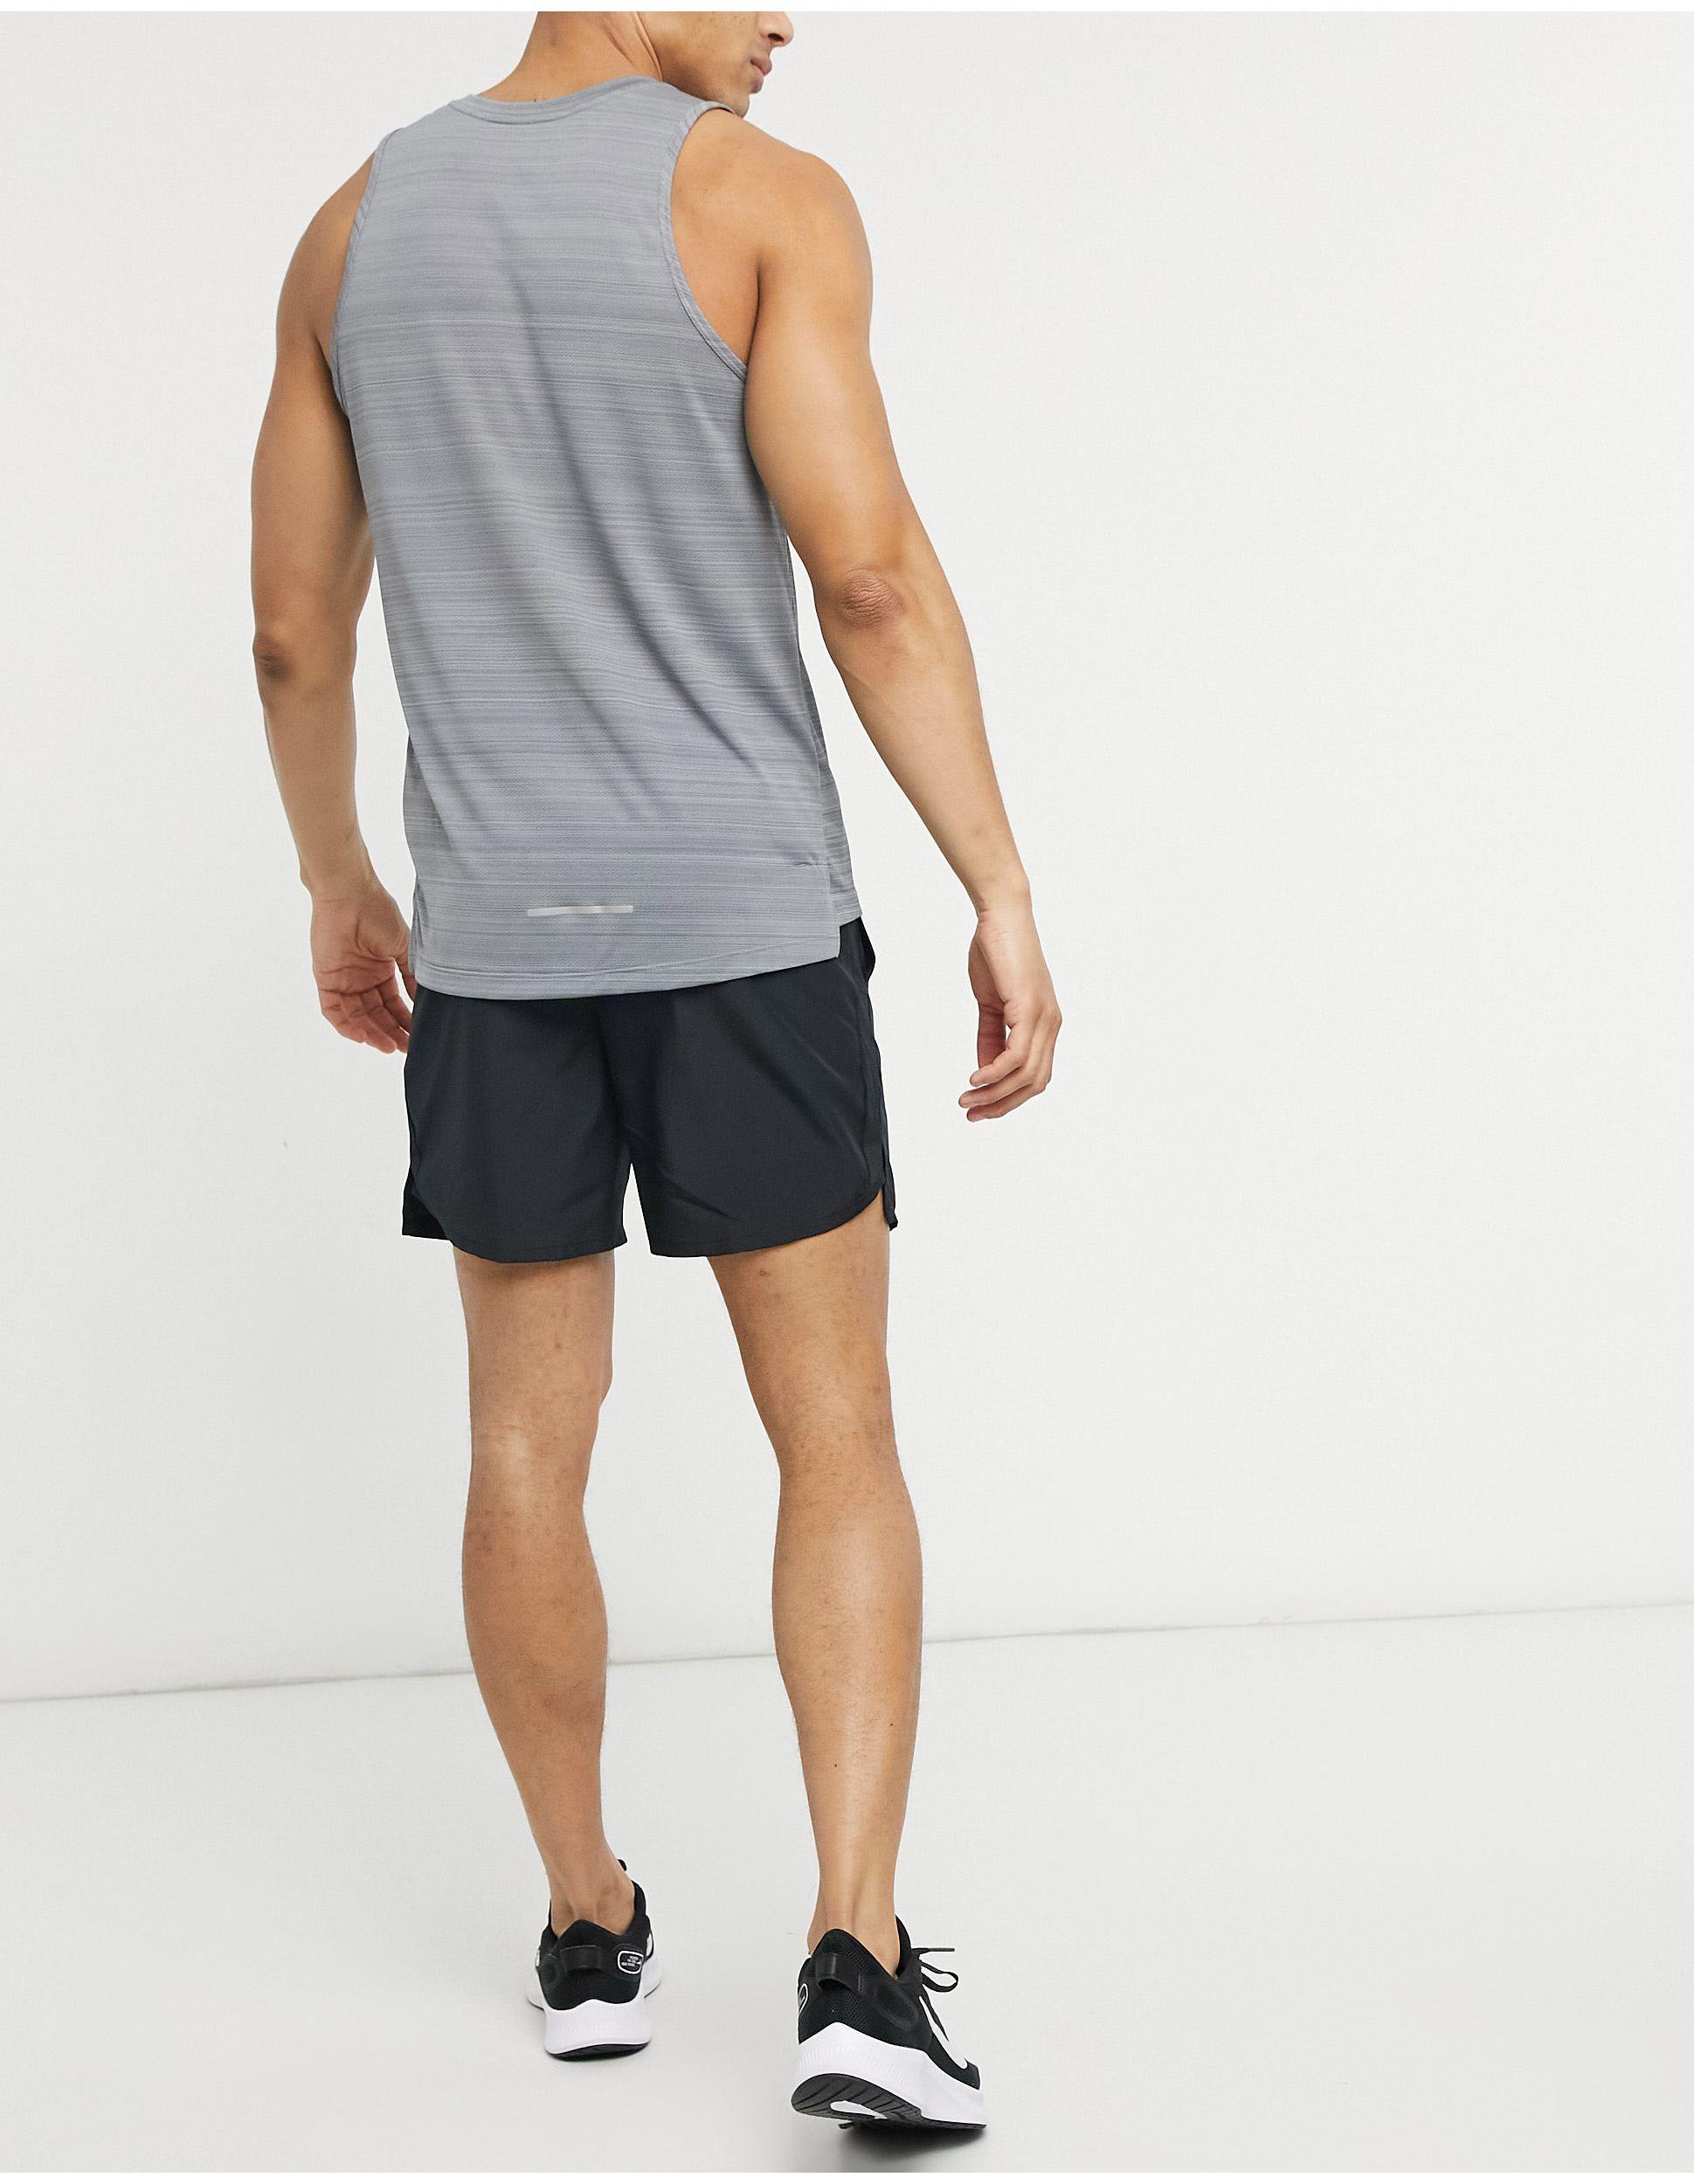 challenger 7 inch running shorts - grey